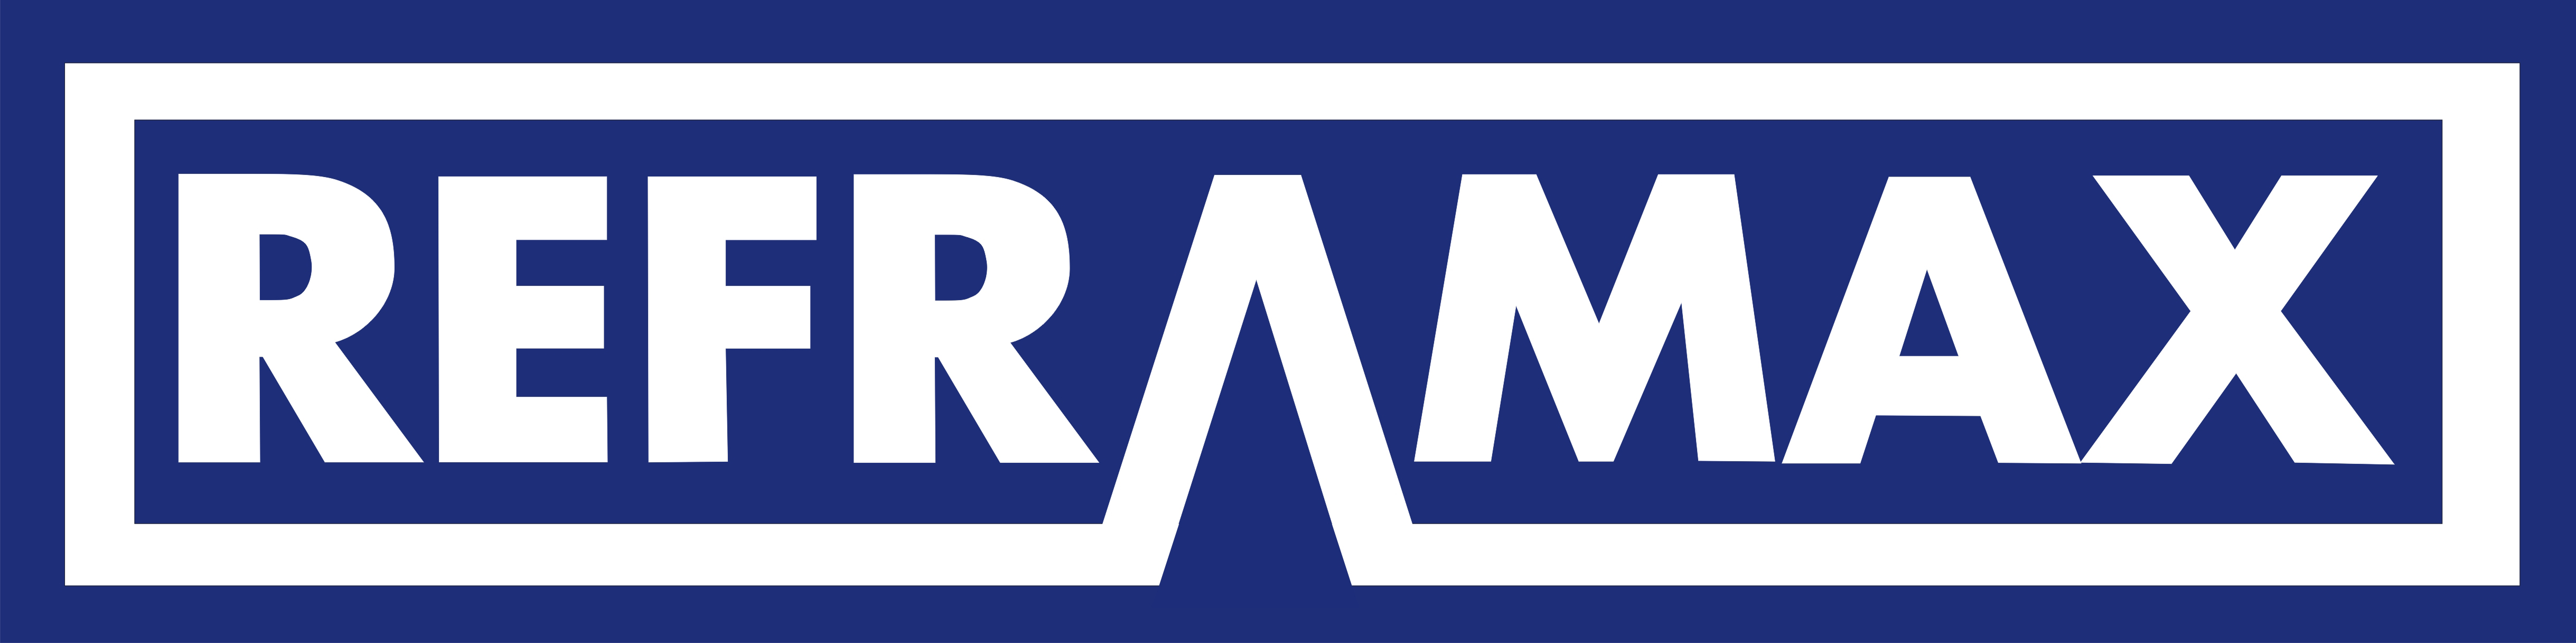 Logomarca da Reframax Engenharia